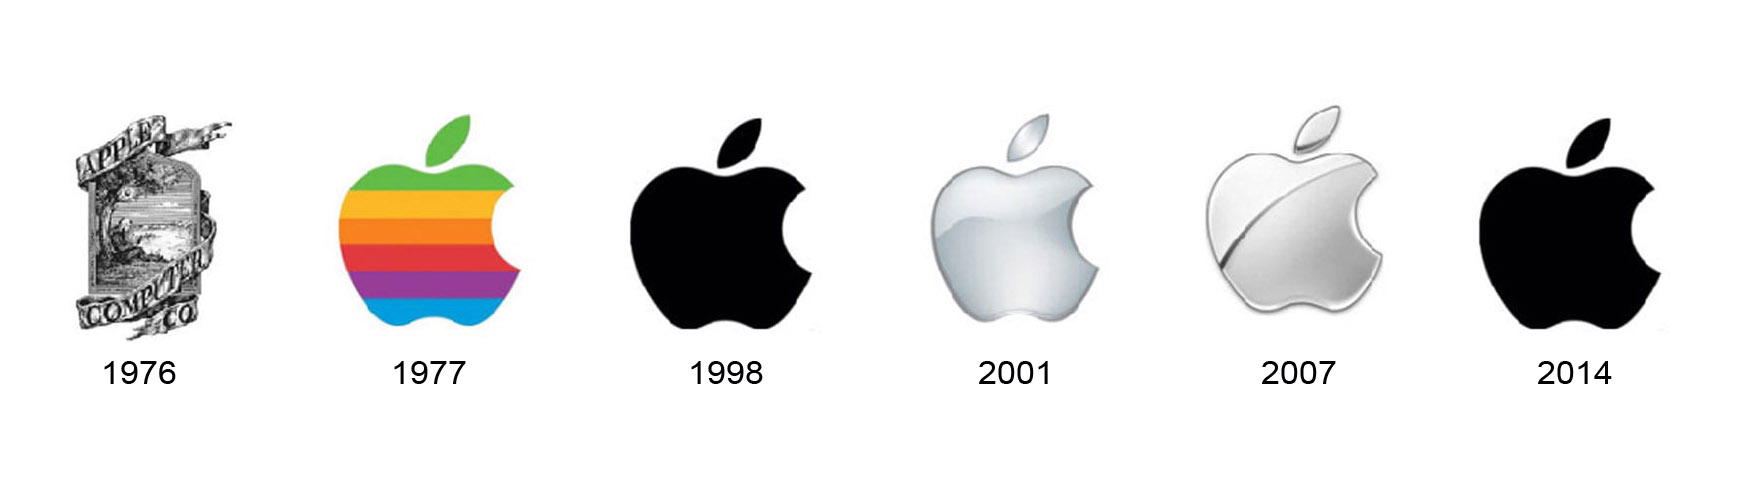 эволюция логотипа apple